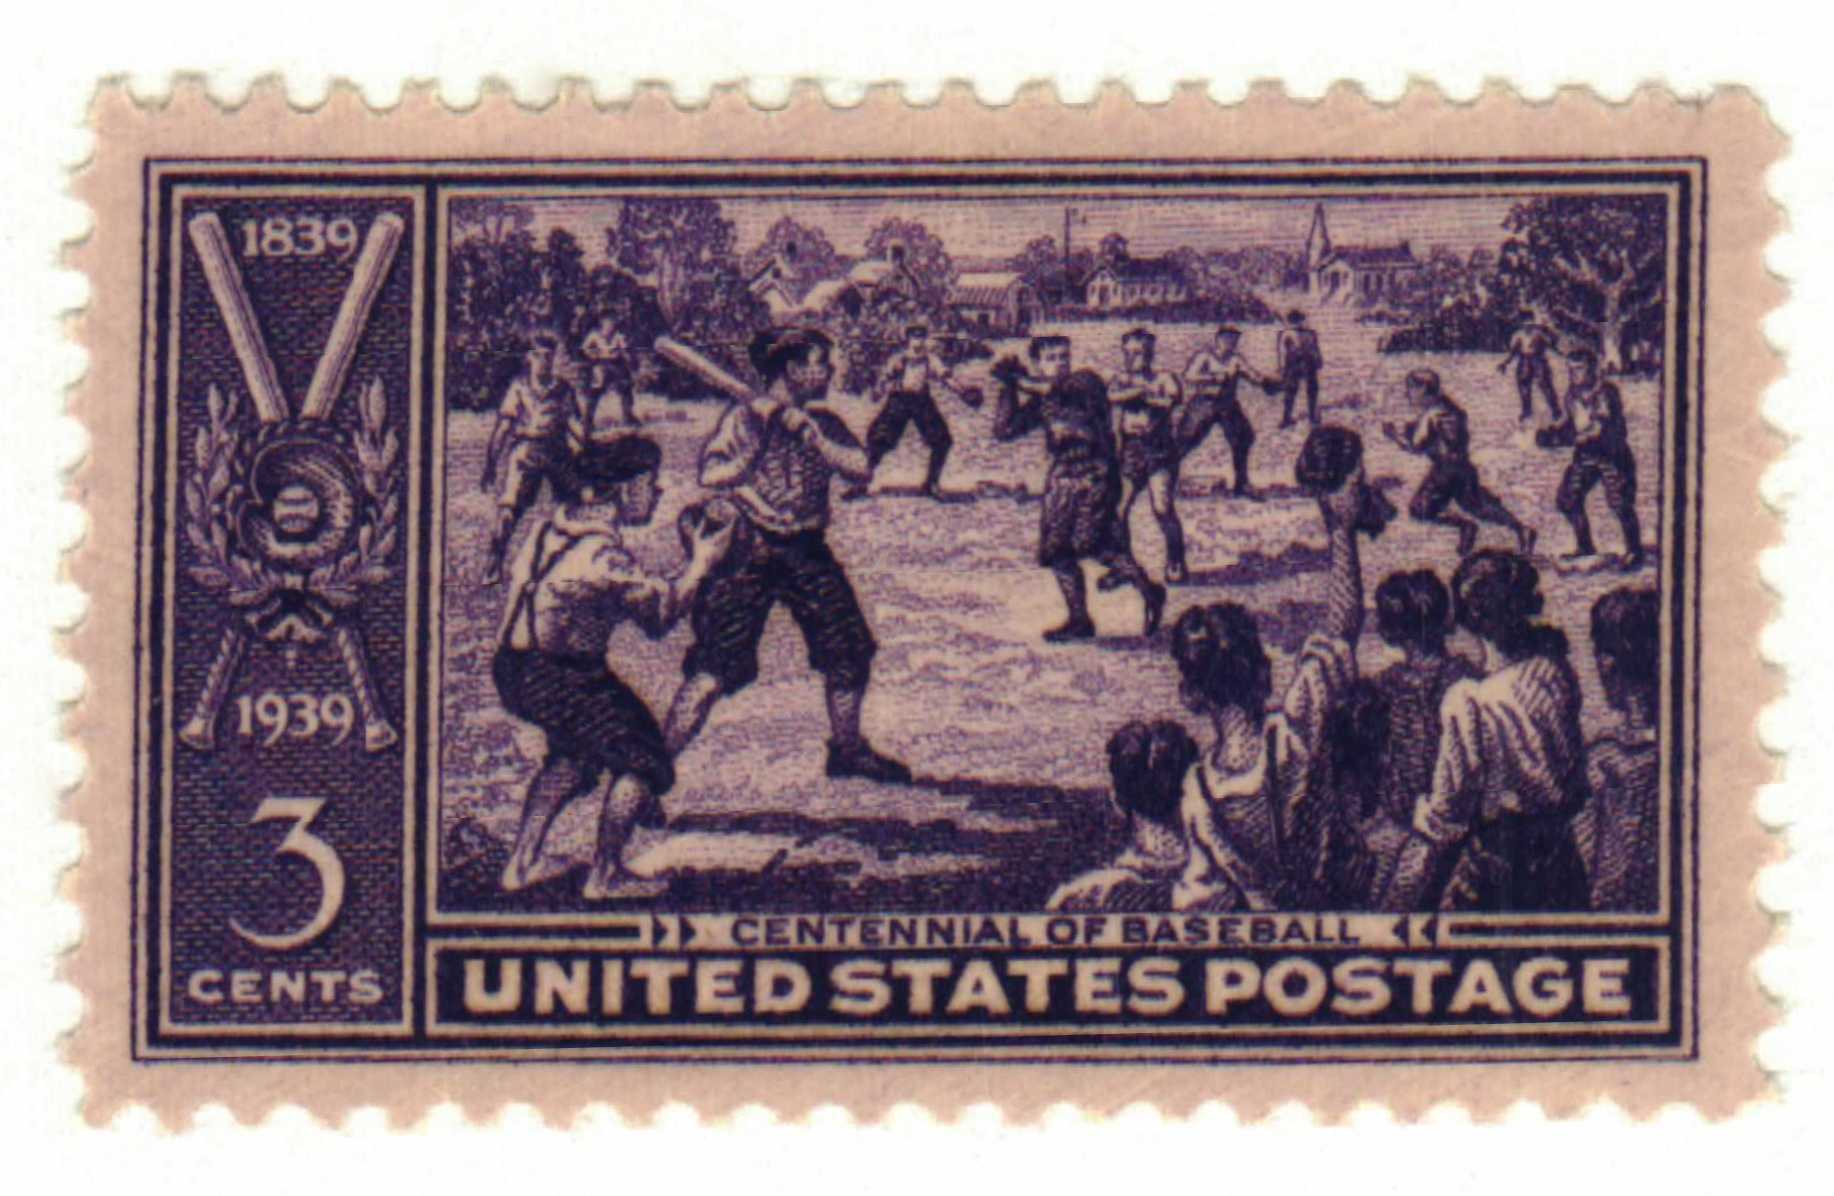 2G3 1939 25c Food Order Stamp, Second Printing 1939